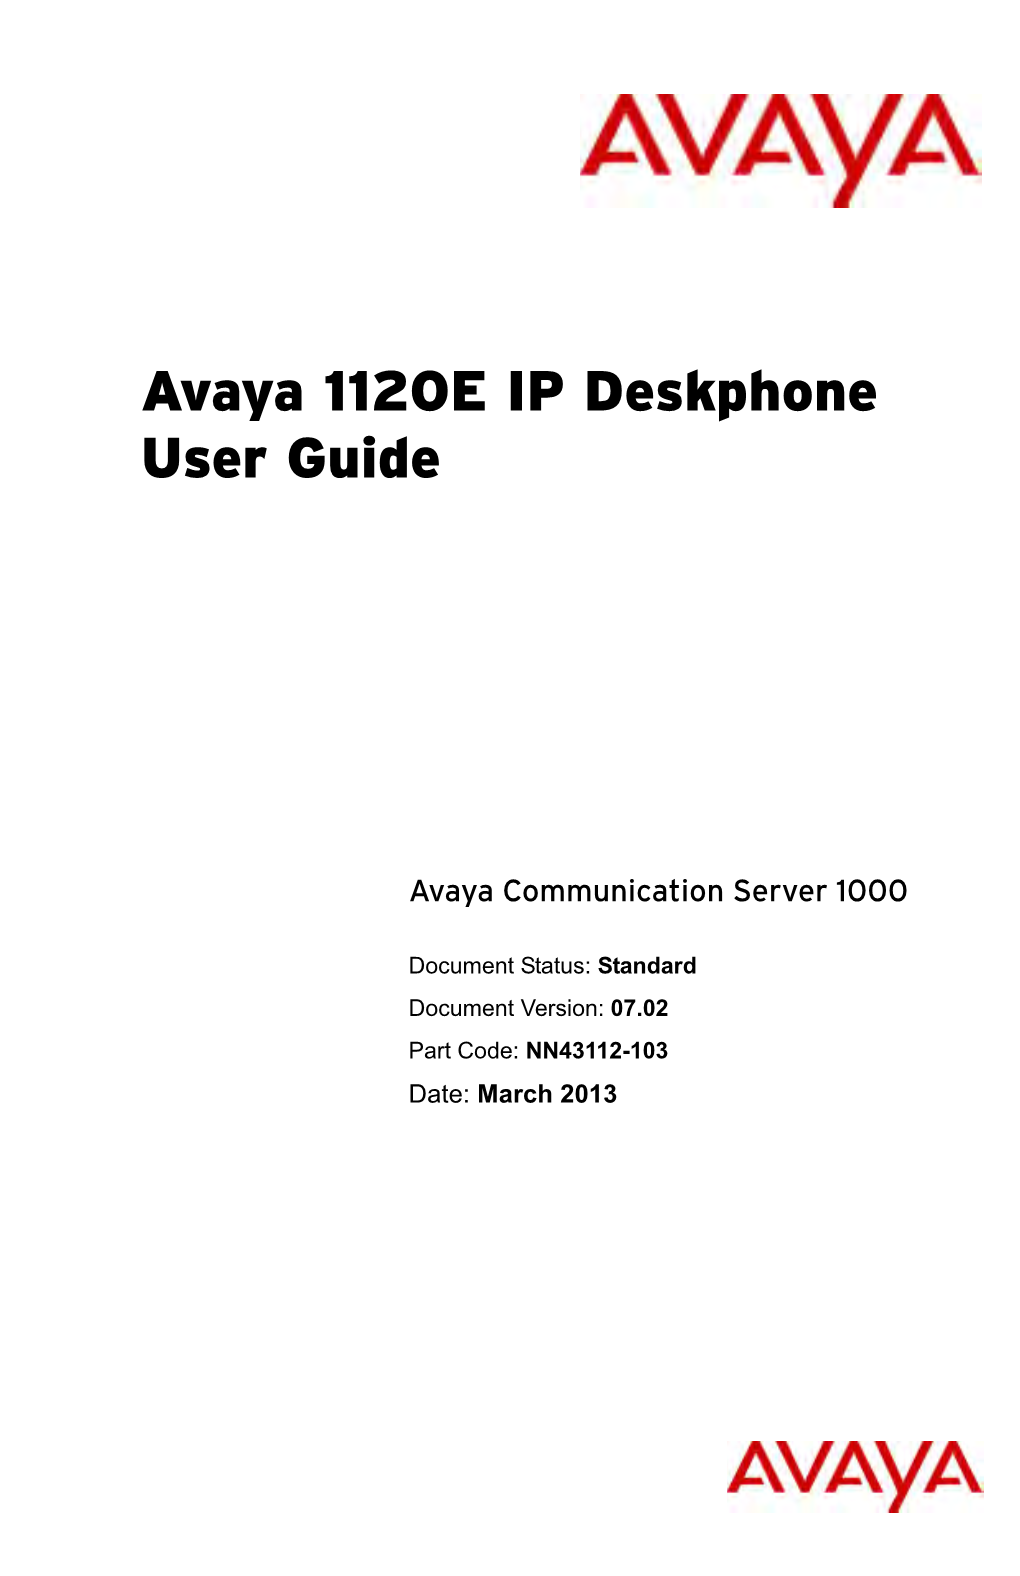 Avaya 1120E IP Deskphone User Guide